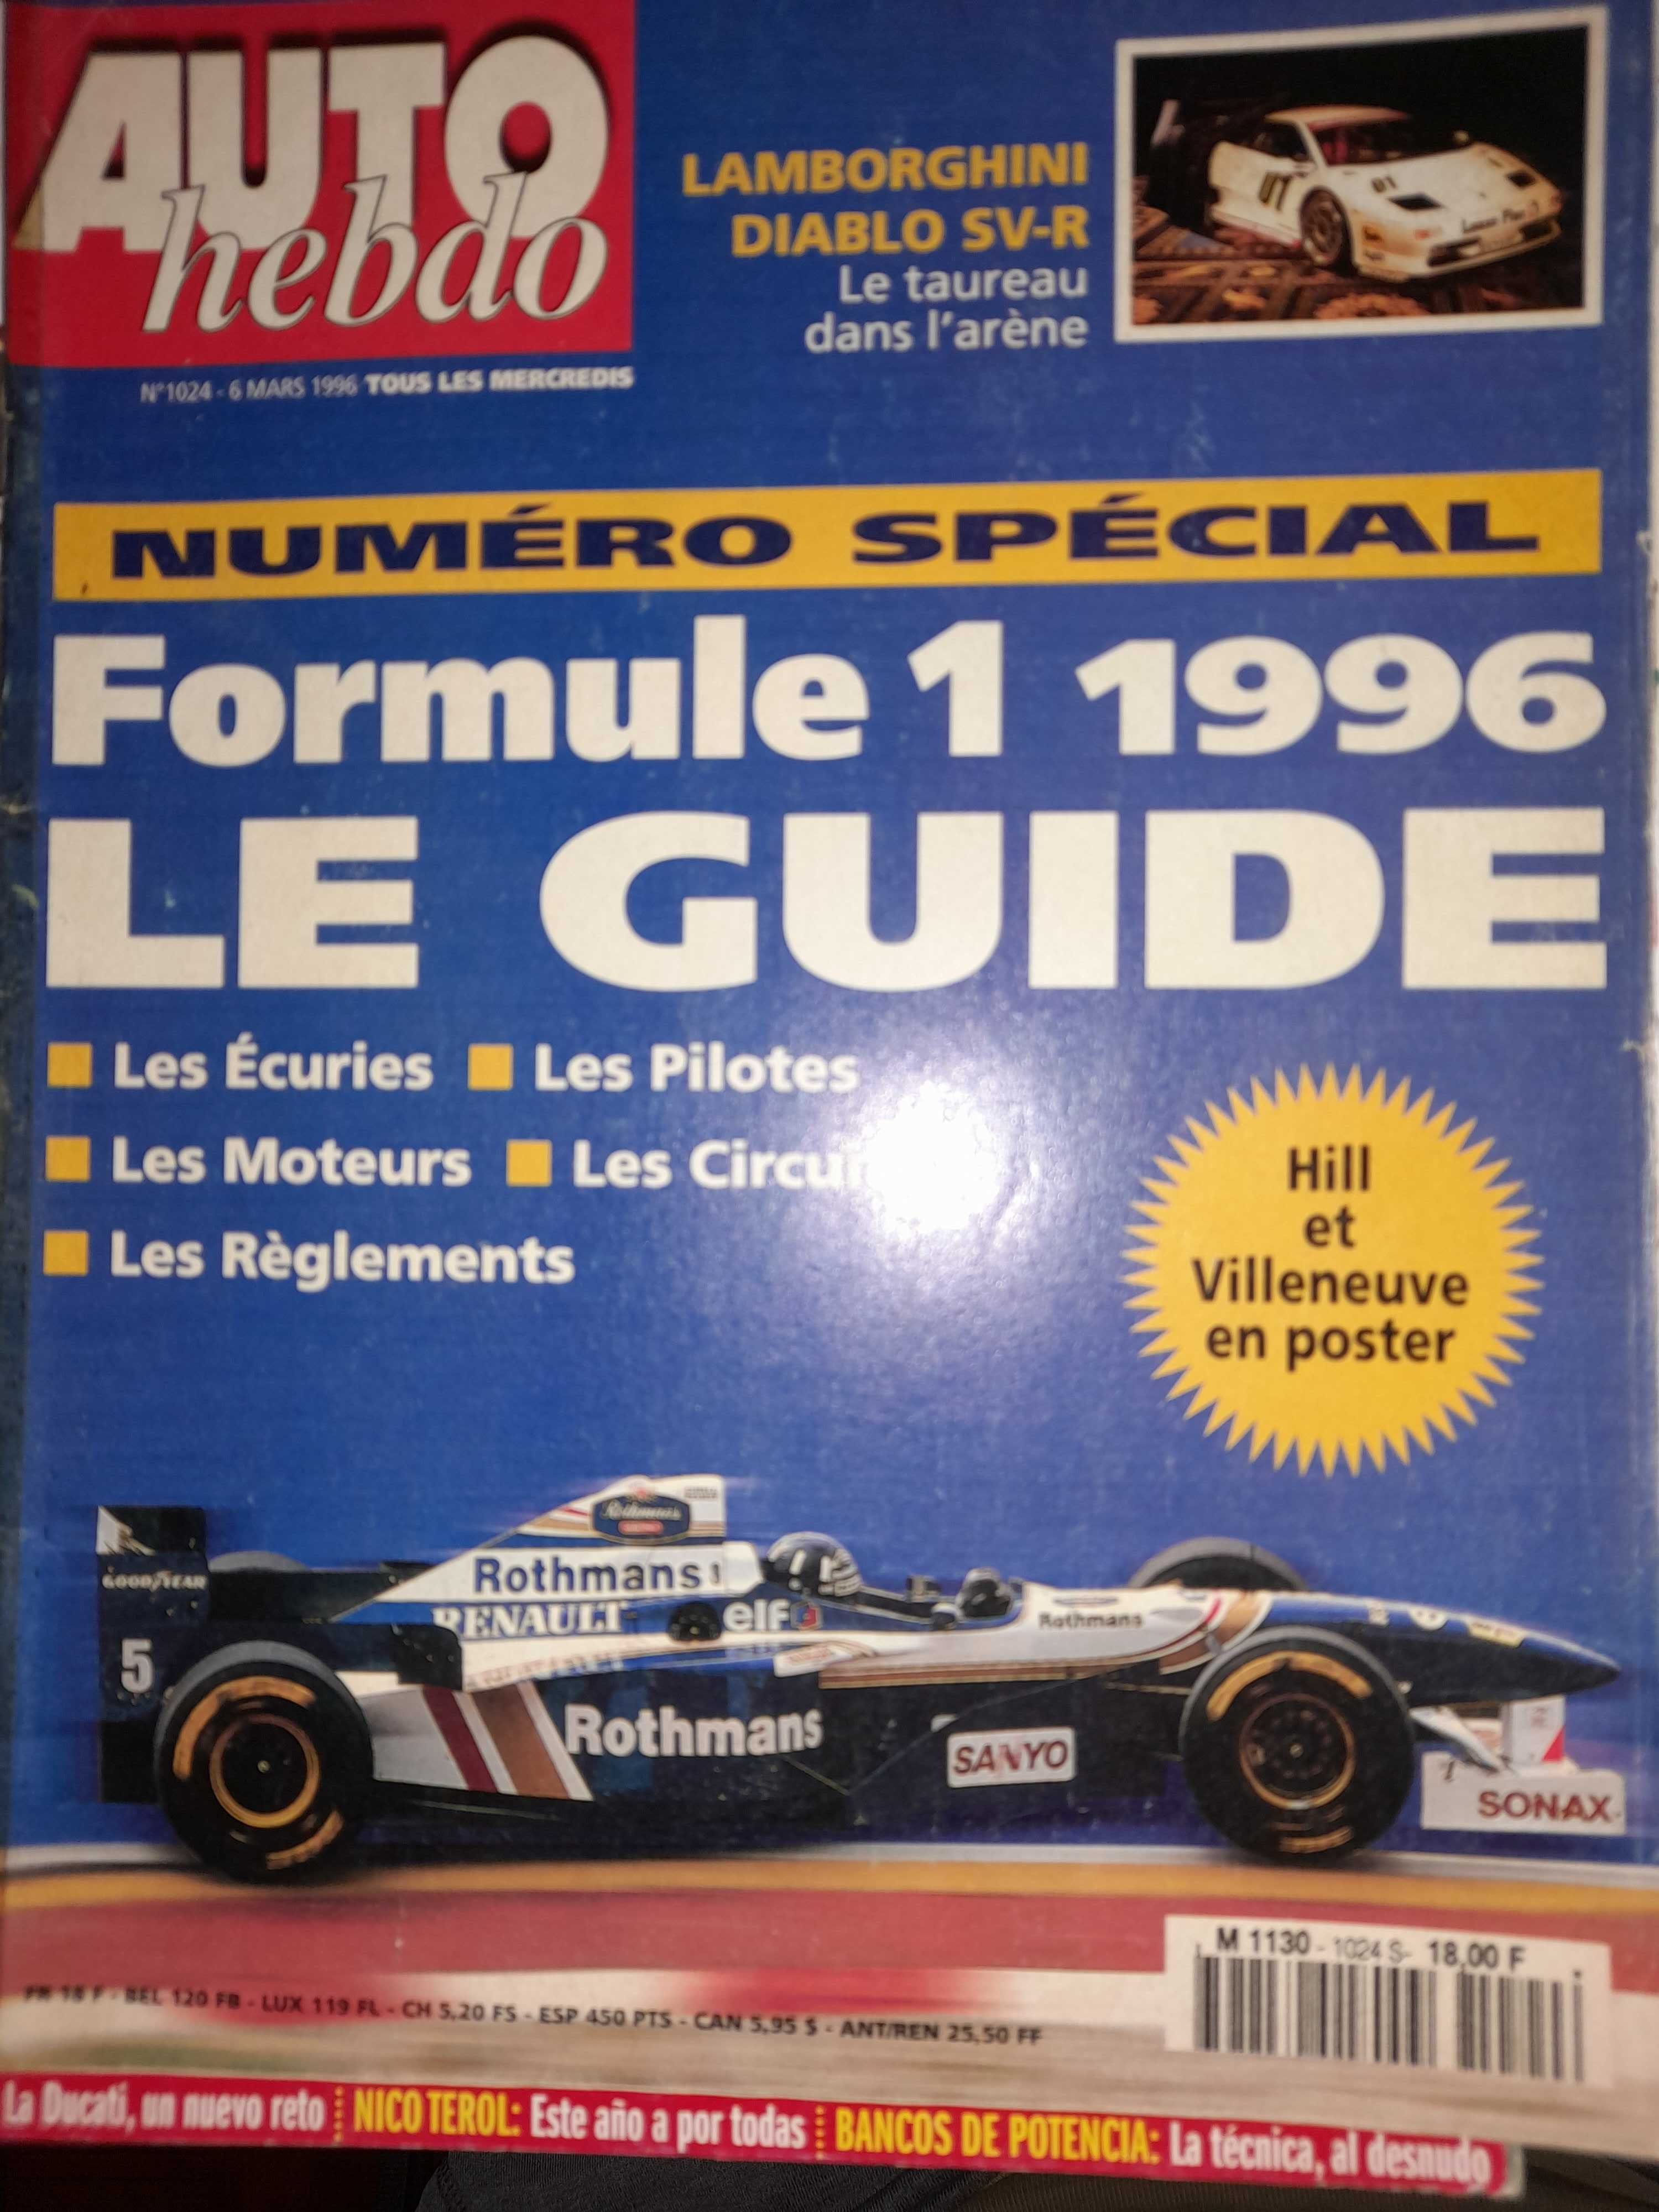 Revista F1 1996 c/autógrafos VILLENEUVE-HAKKINEN-COULTHARD-LAMY etc.